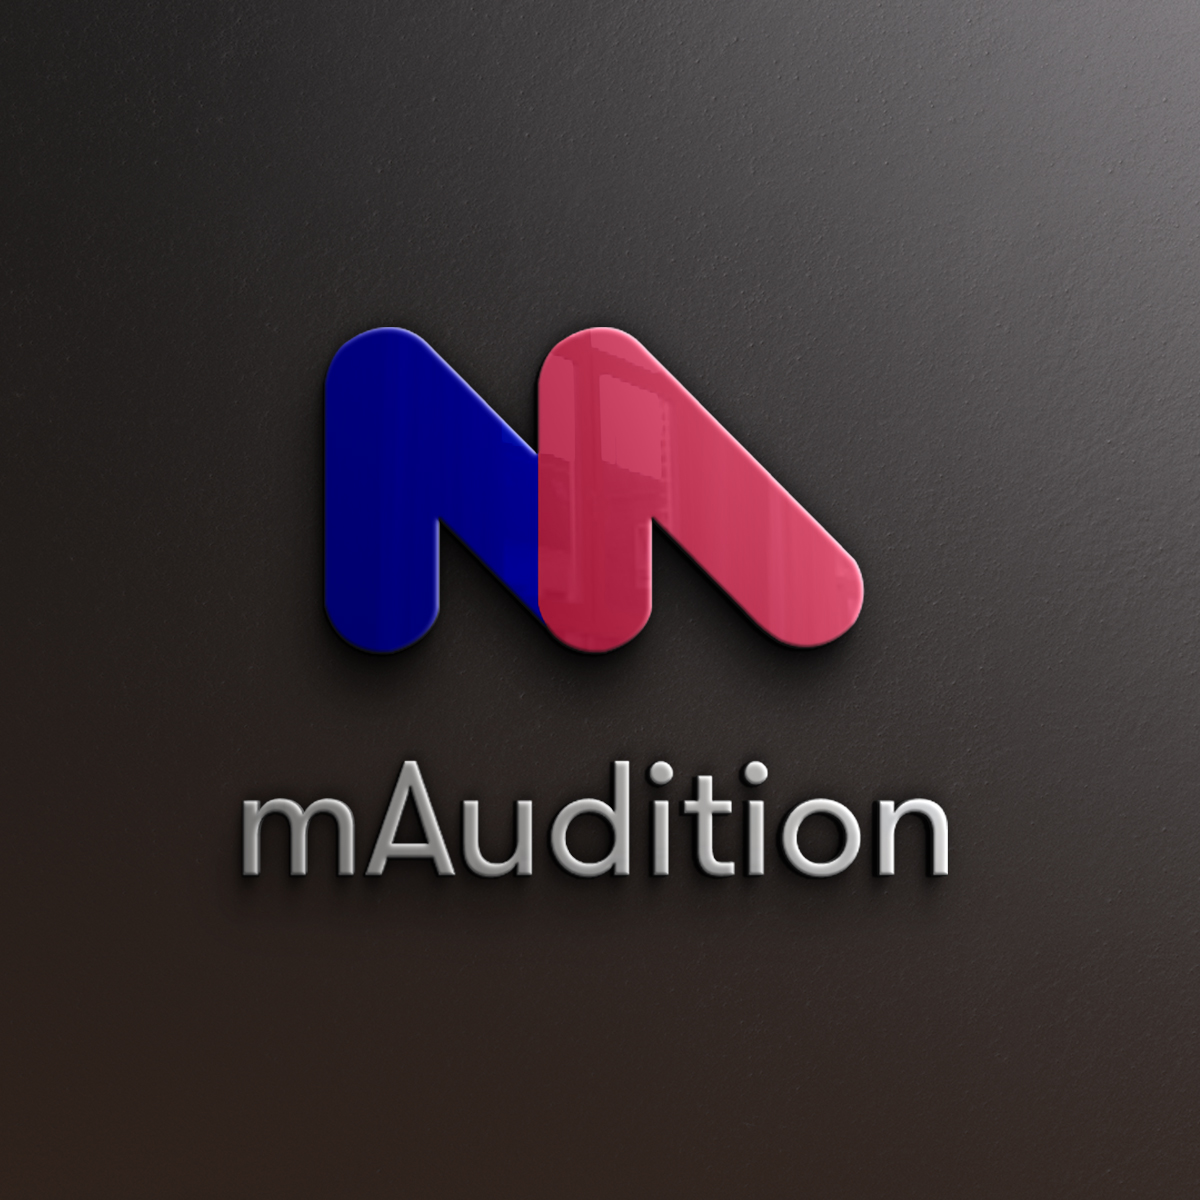 mAudition – The Best Mobile Audition Platform